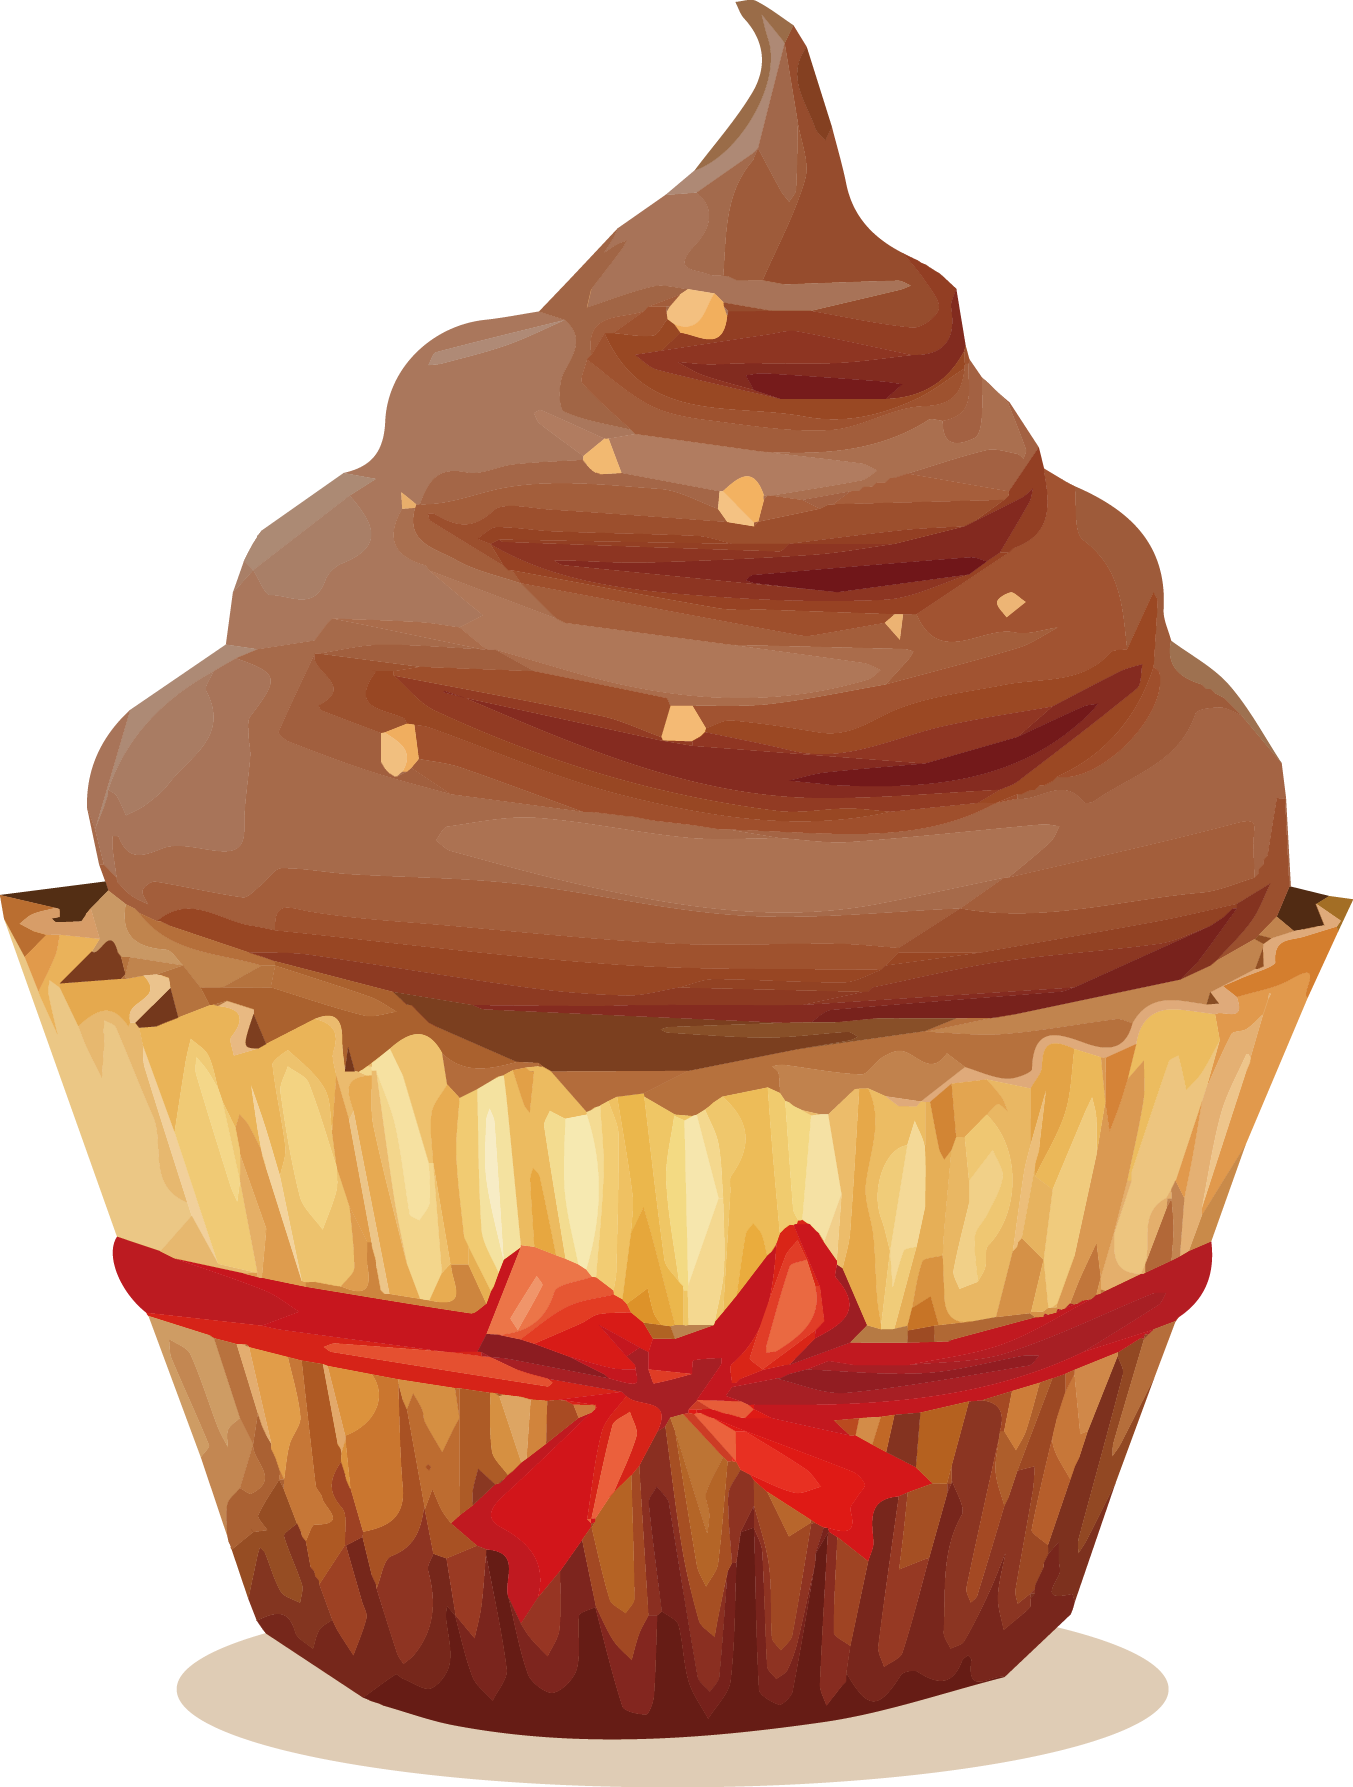 Cupcake Chocolate Cake Muffin Cream - Cupcake (1353x1787)